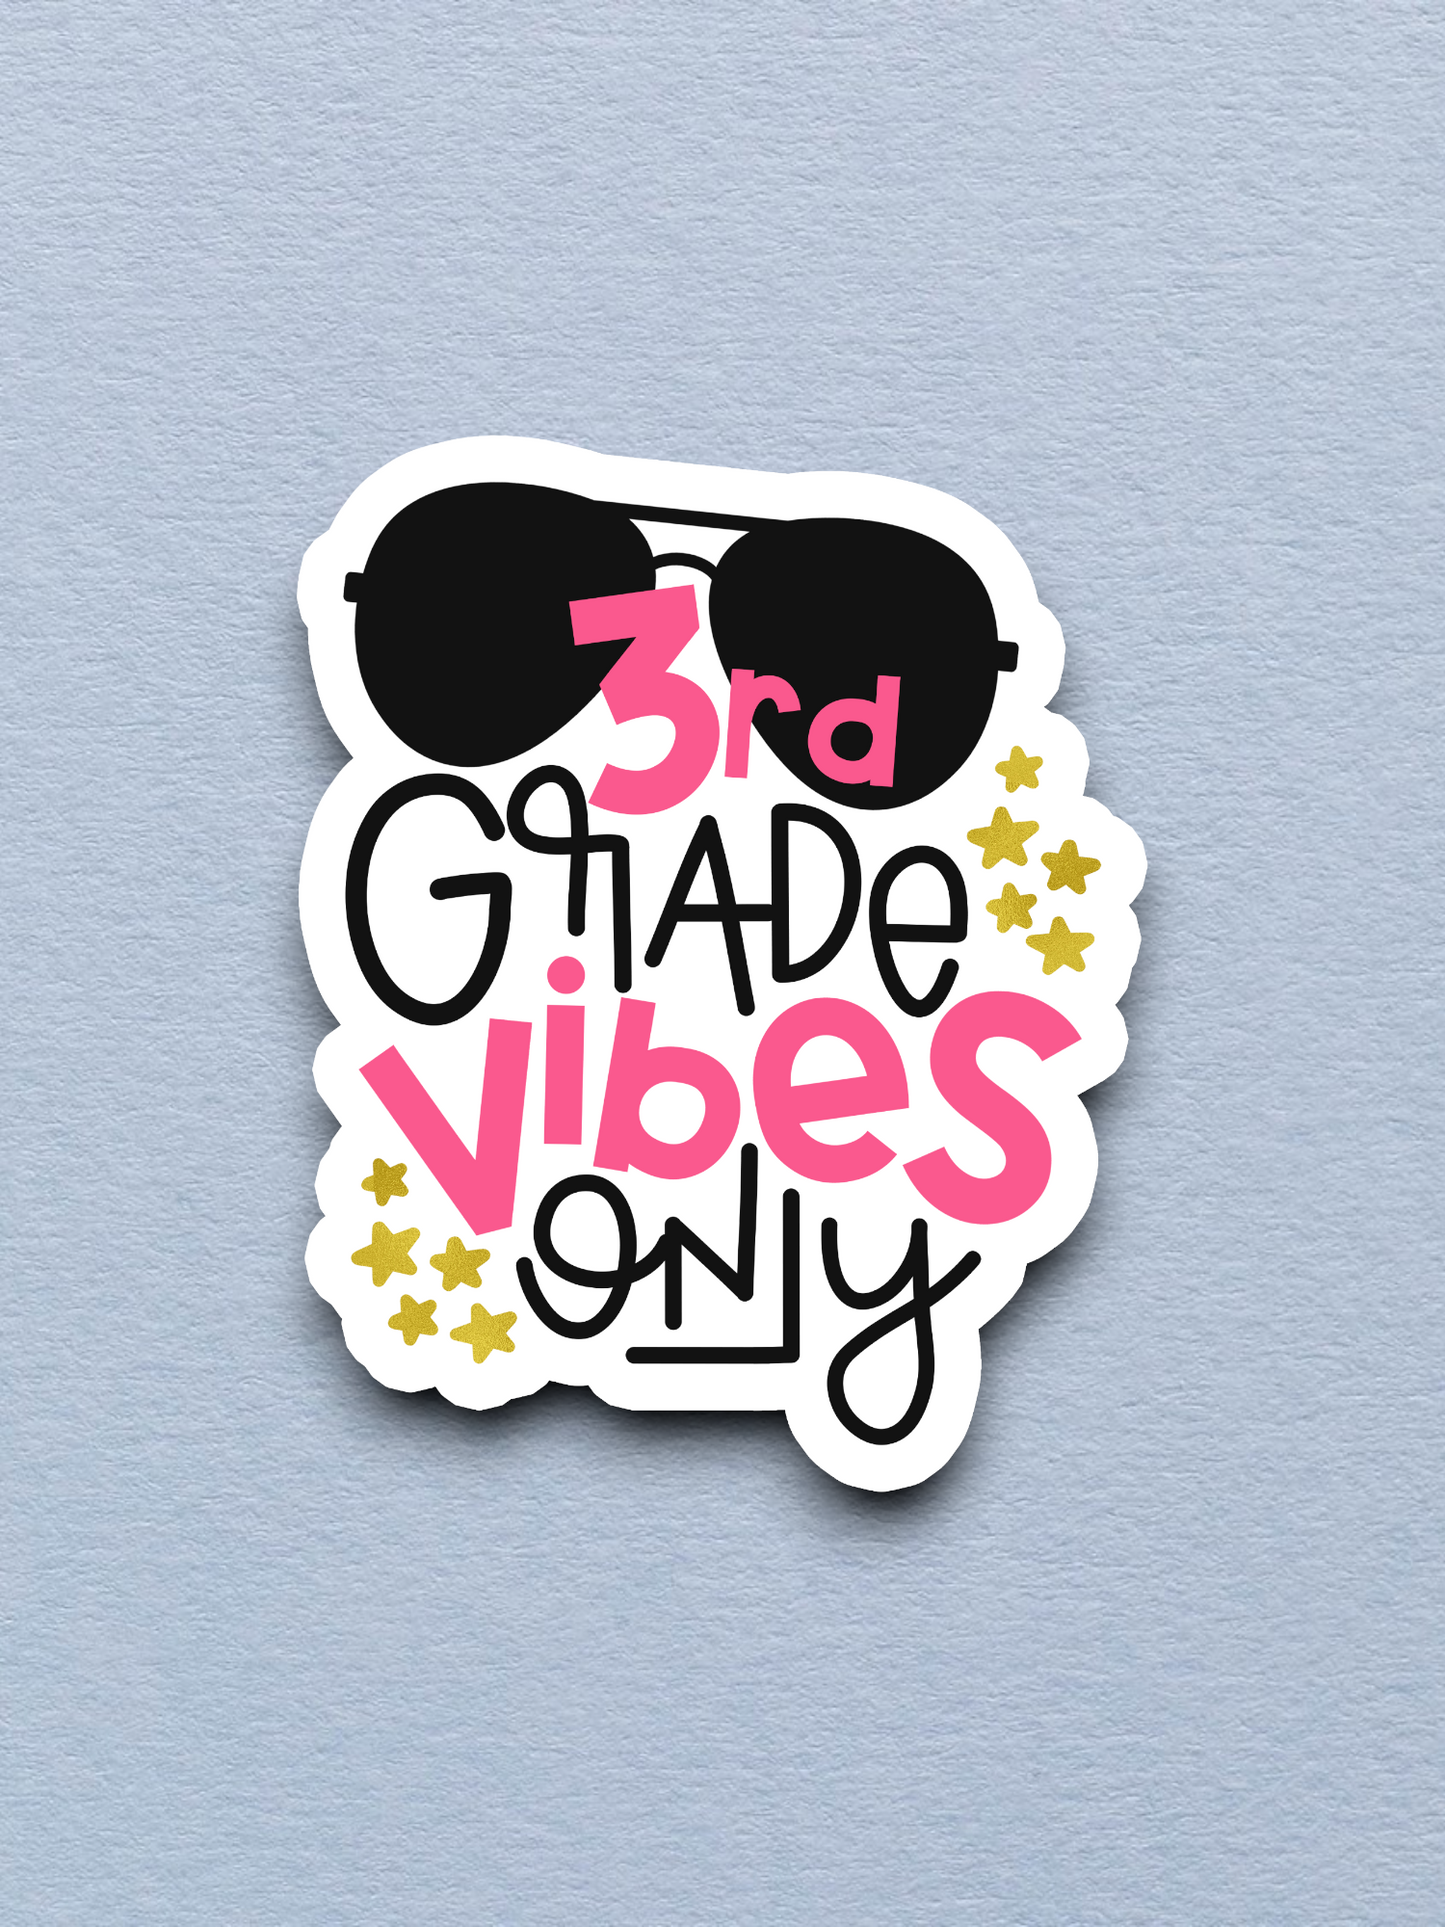 3rd Grade Vibes Only - School Sticker